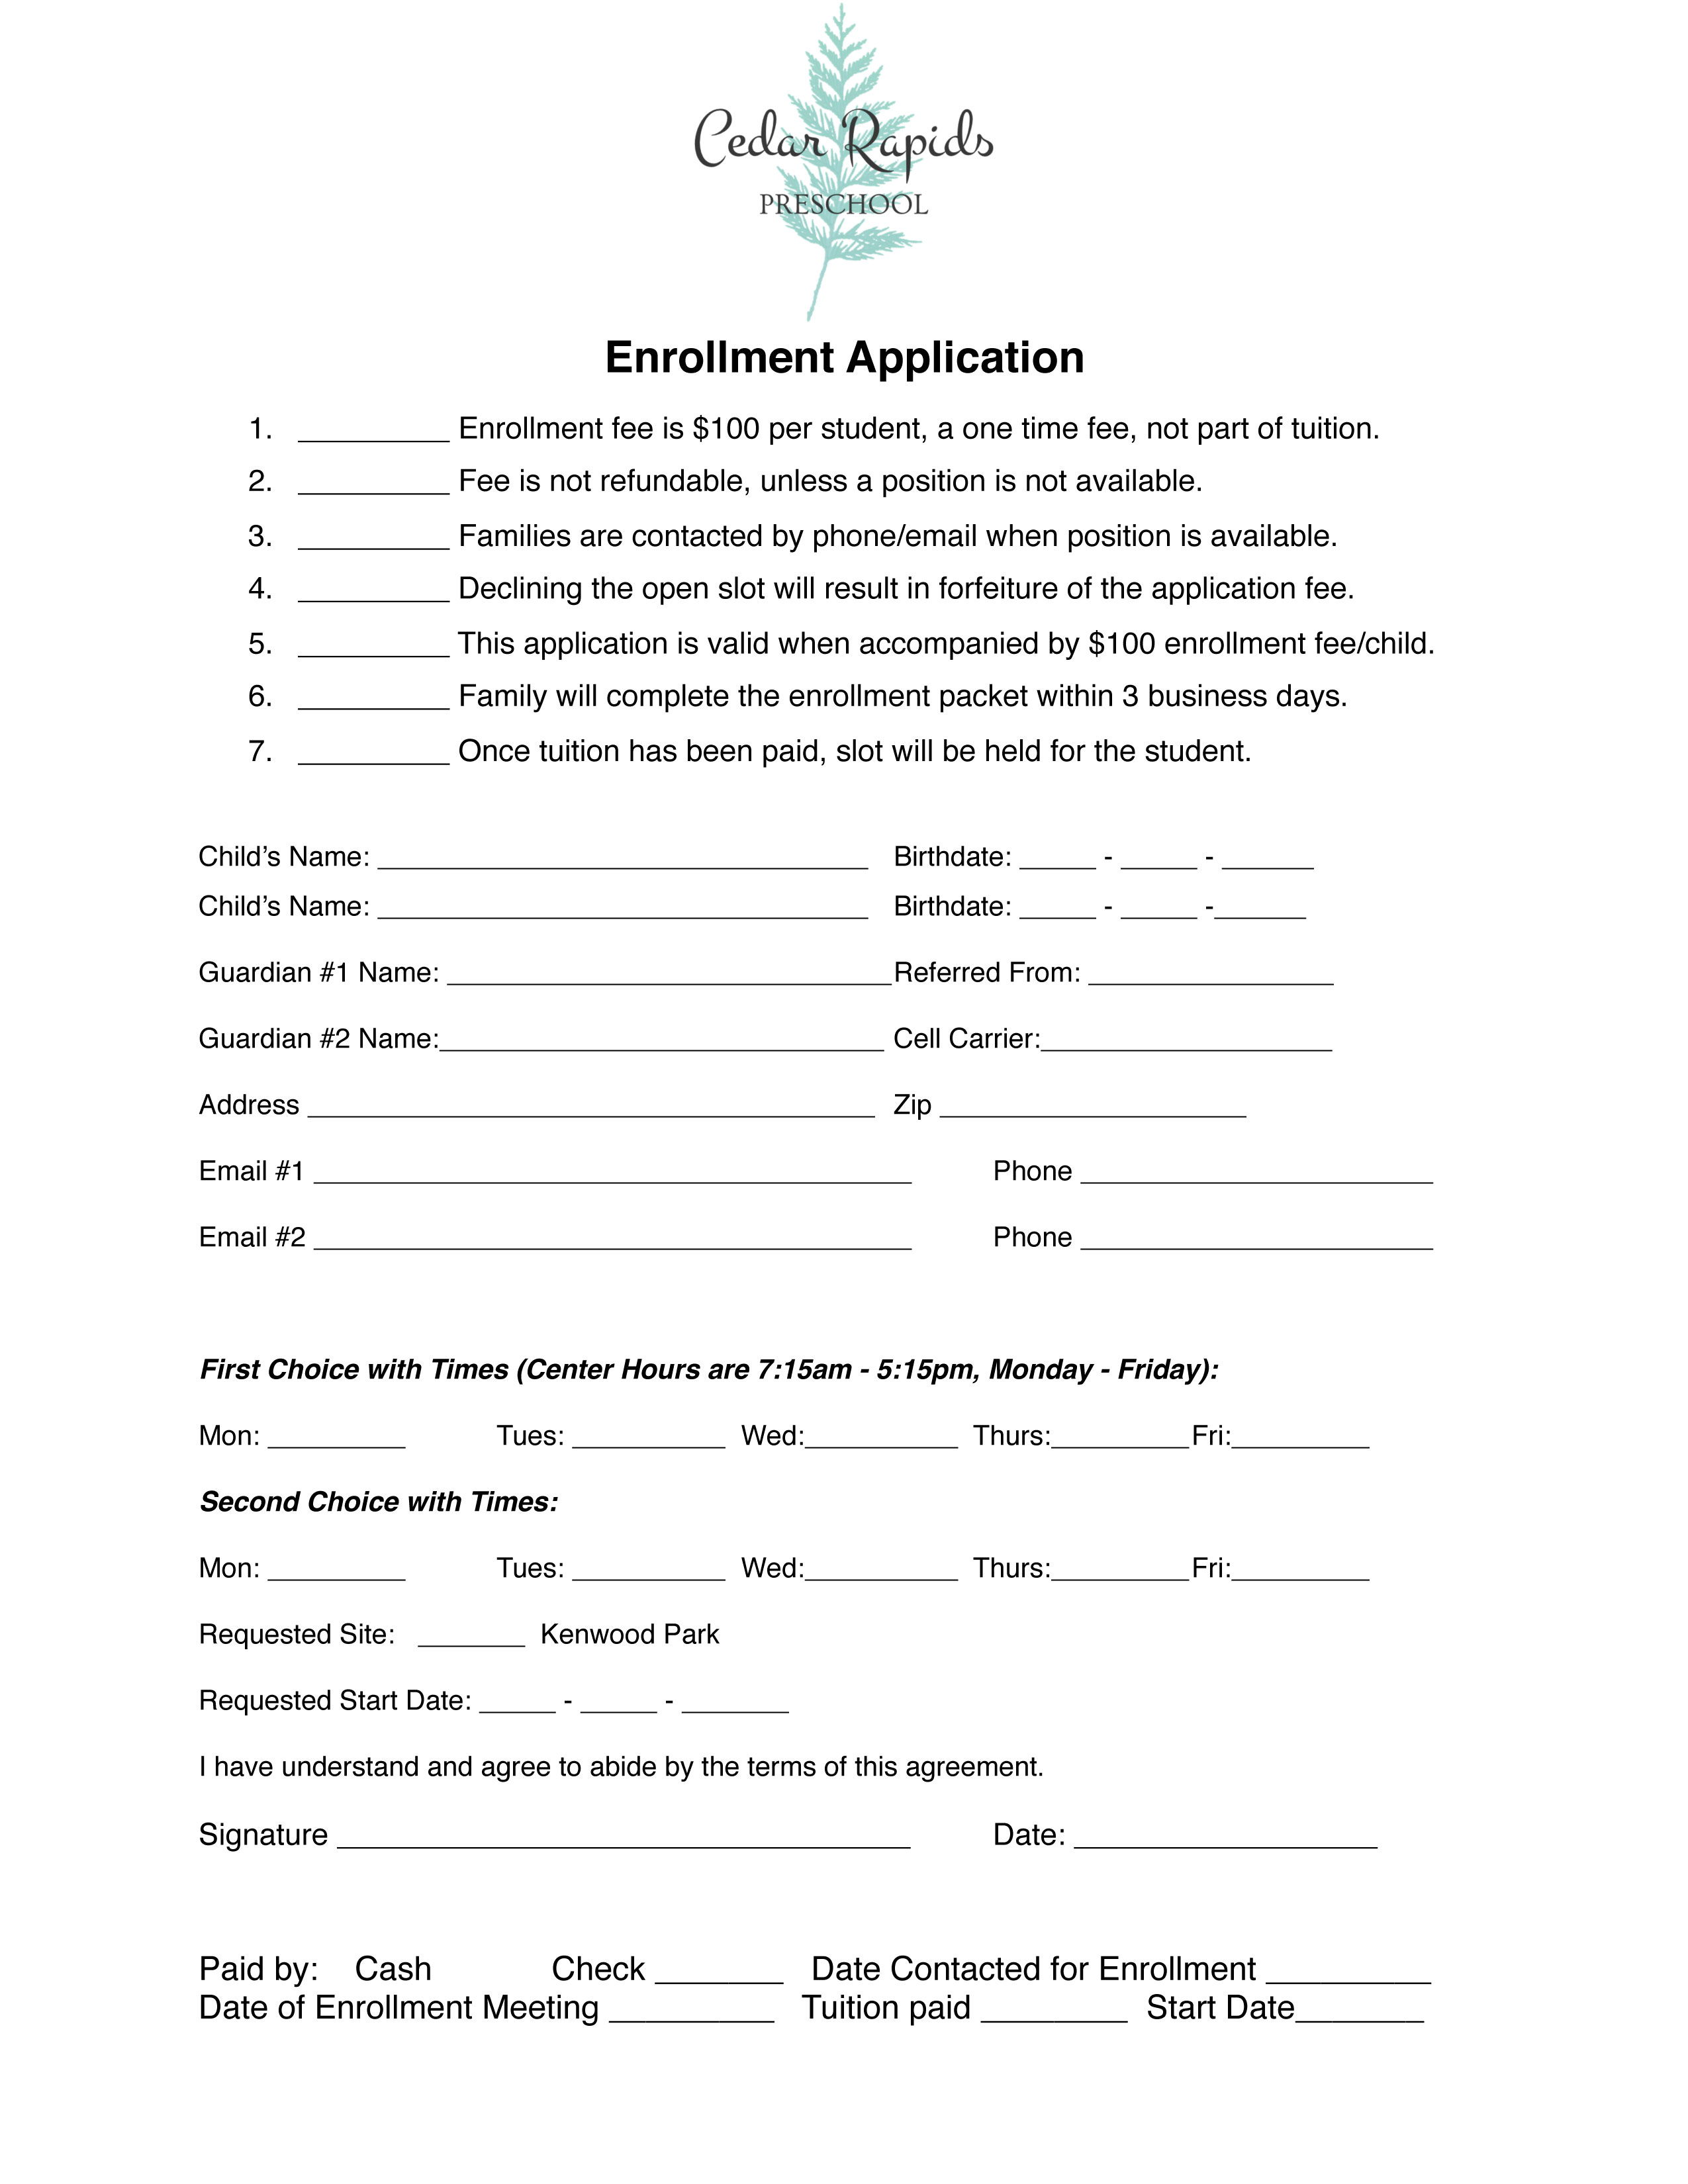 Cedar Rapids Preschool Application